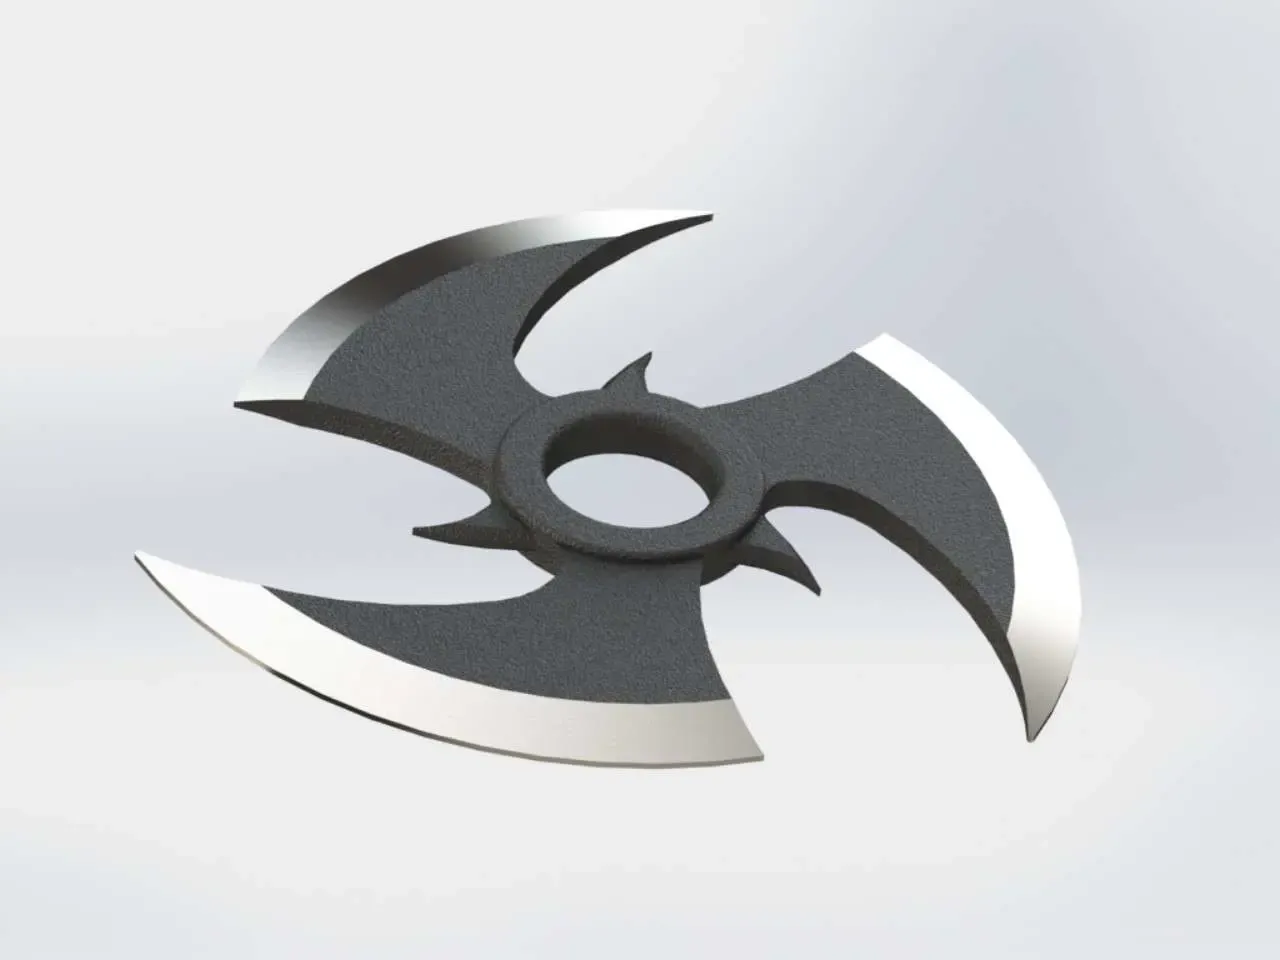 Shuriken 3 Blades Ninja Star Replica